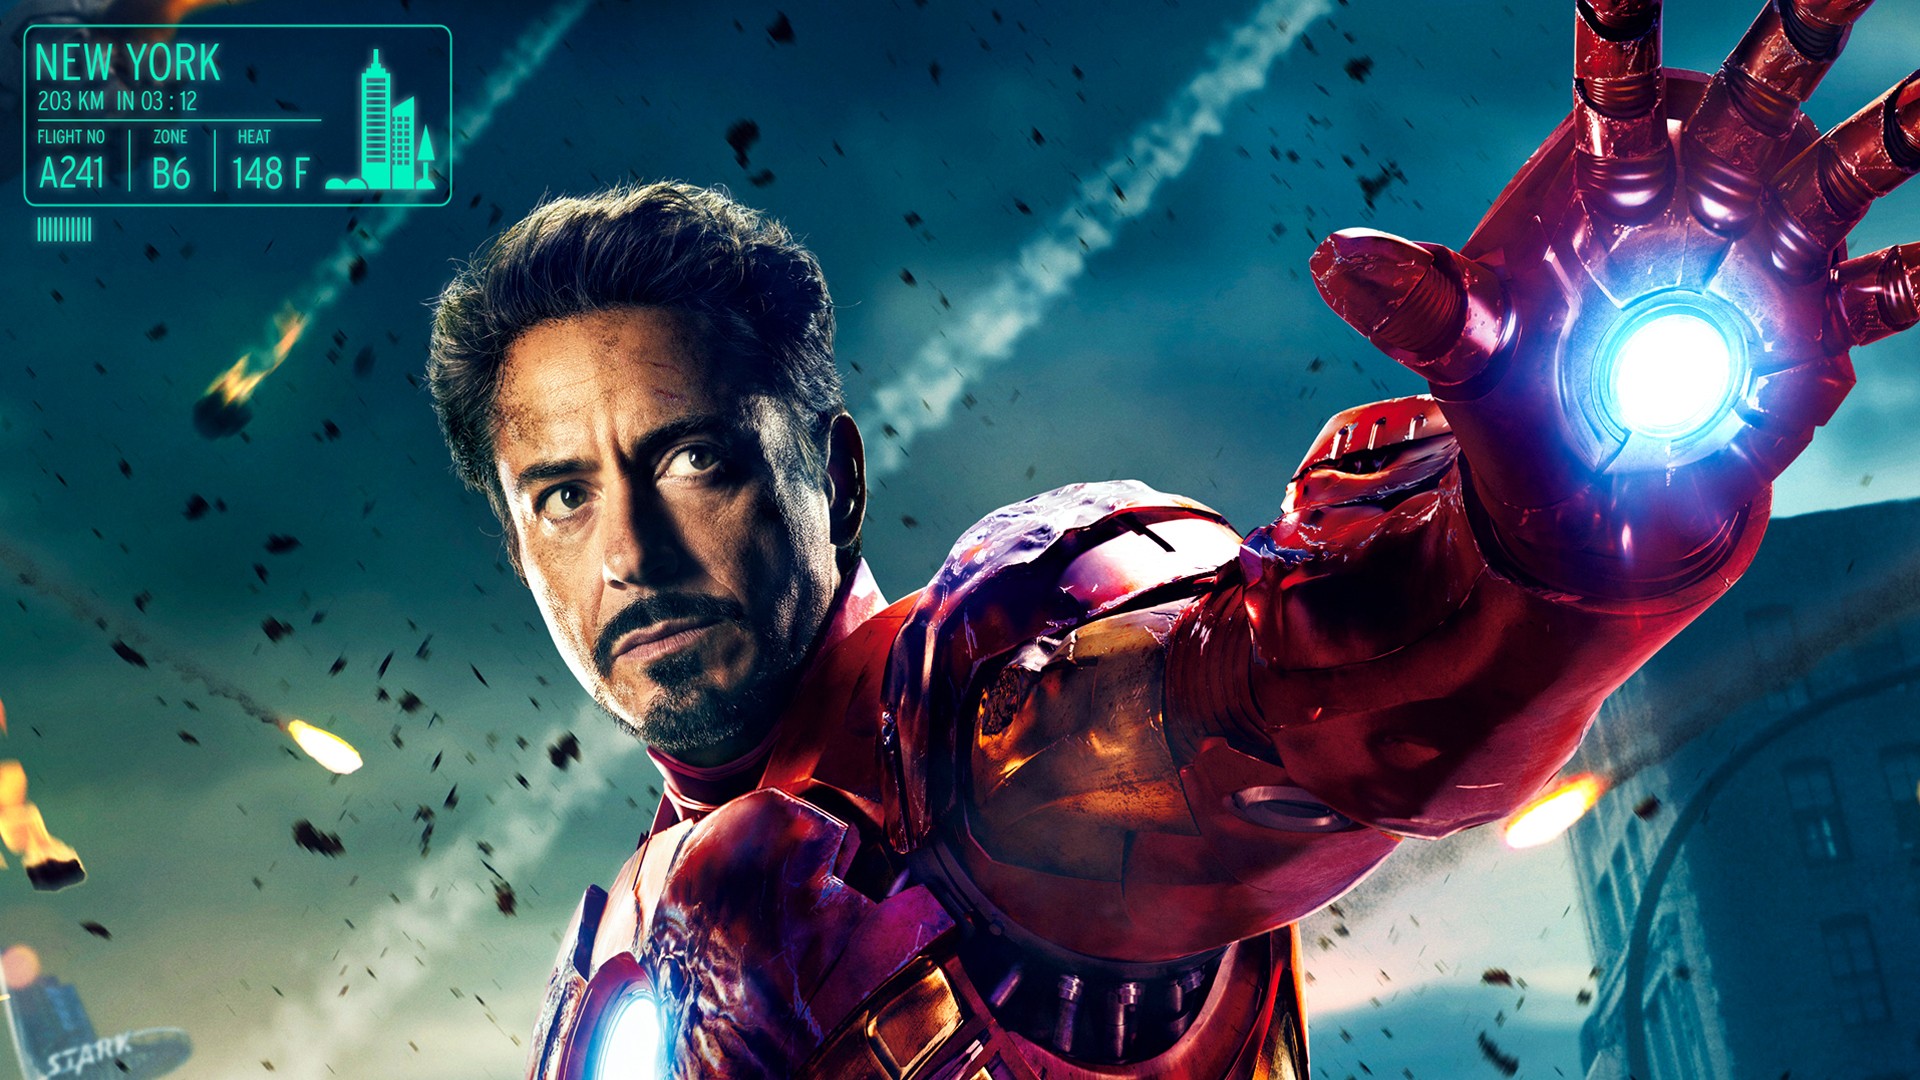 General 1920x1080 Robert Downey Jr. Avengers: Age of Ultron Iron Man Tony Stark Marvel Cinematic Universe movies beard men actor hero armor superhero Marvel Comics